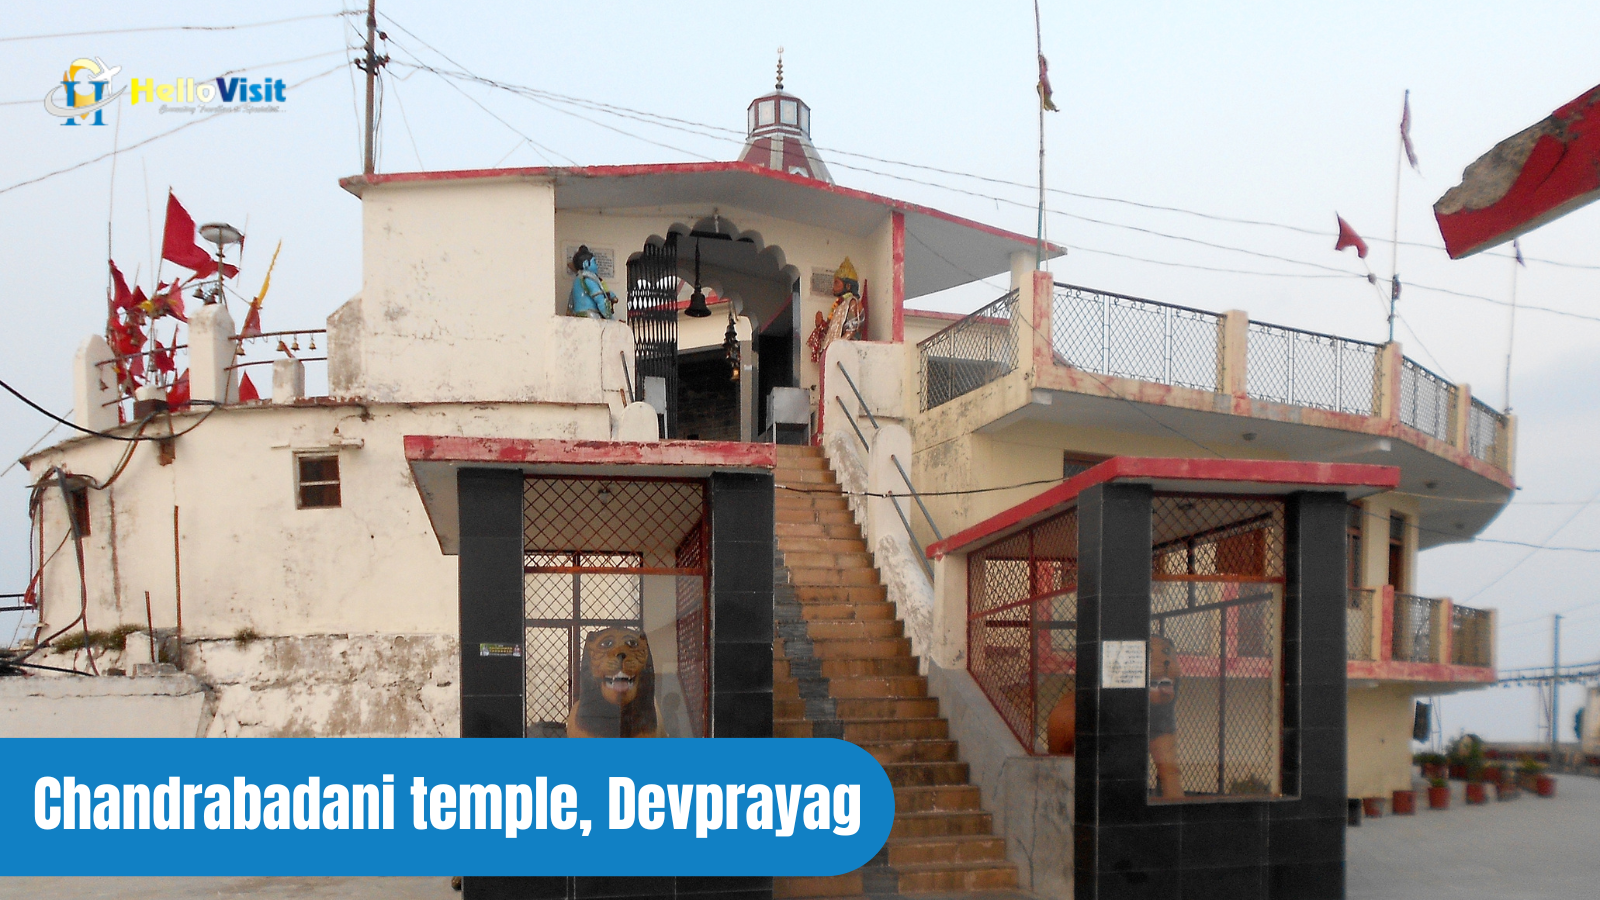 Chandrabadani temple, Devprayag